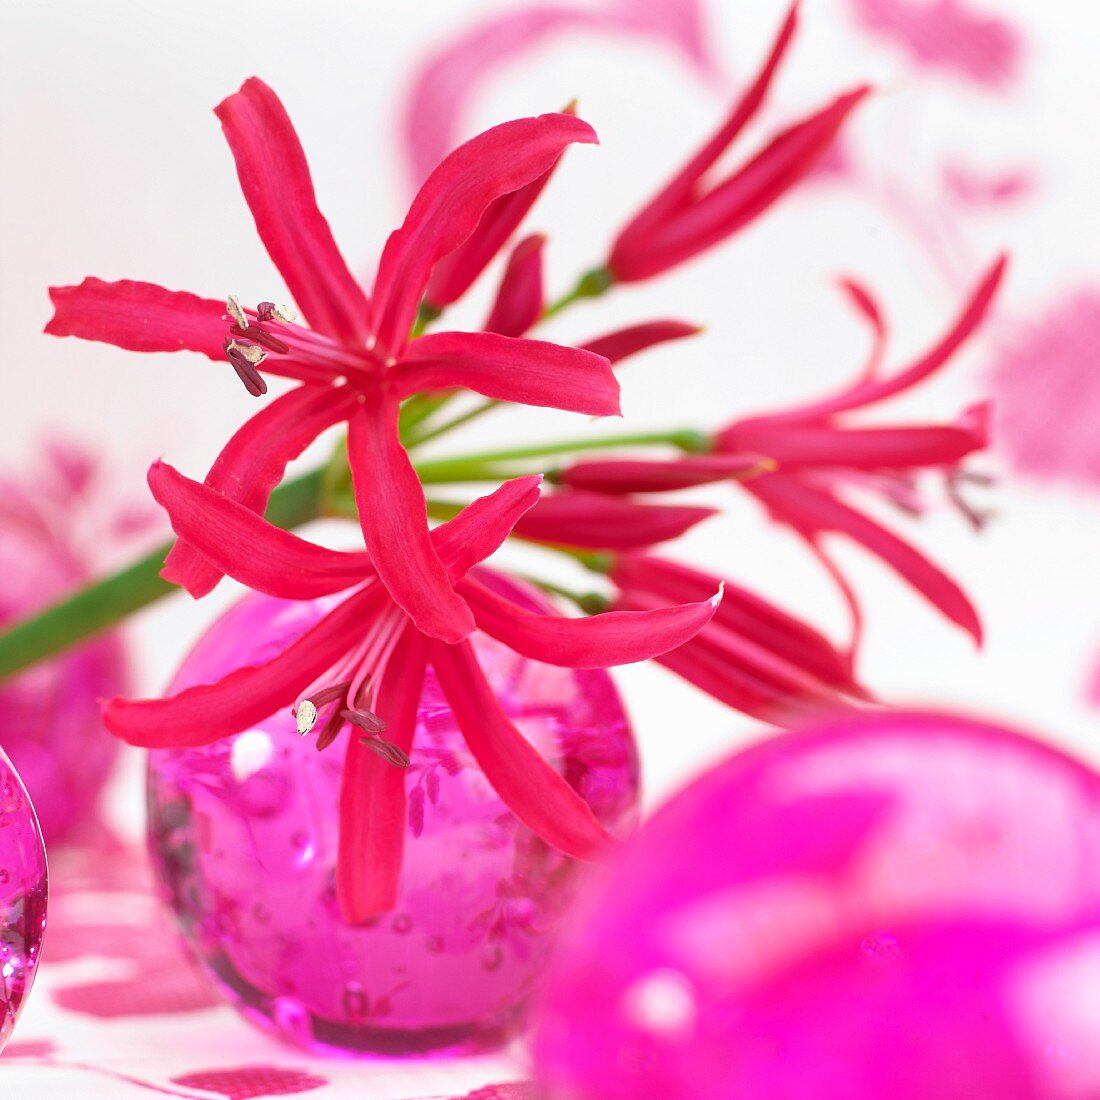 Red nerine flowers (Nerine Elegance) and pink glass balls